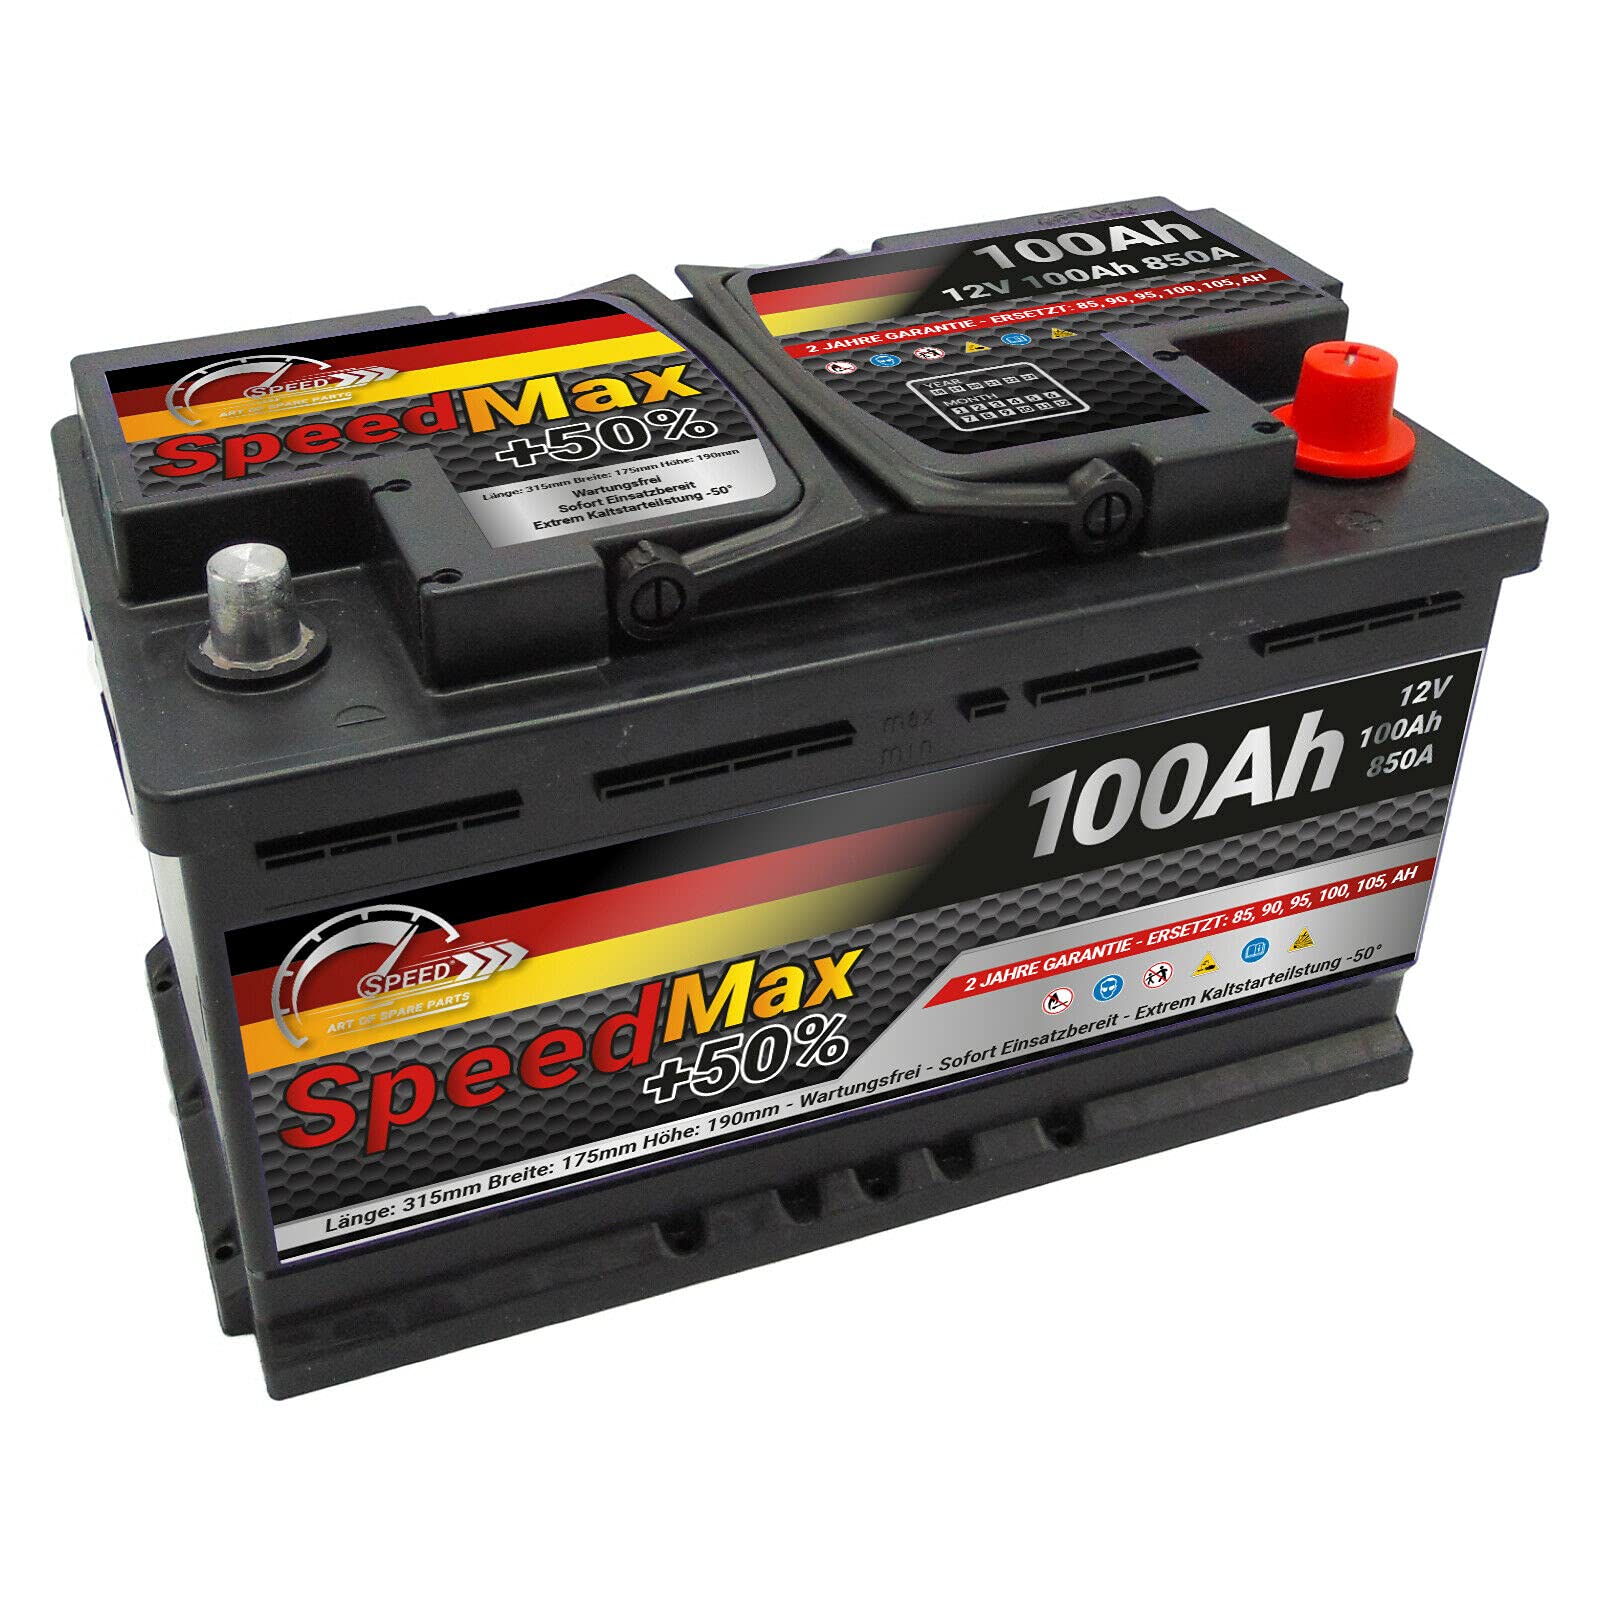 AUTOBATTERIE Speed MAX L4100 100AH 850A 12V = FIamm 100Ah DX+ Pronta all'uso von SMC